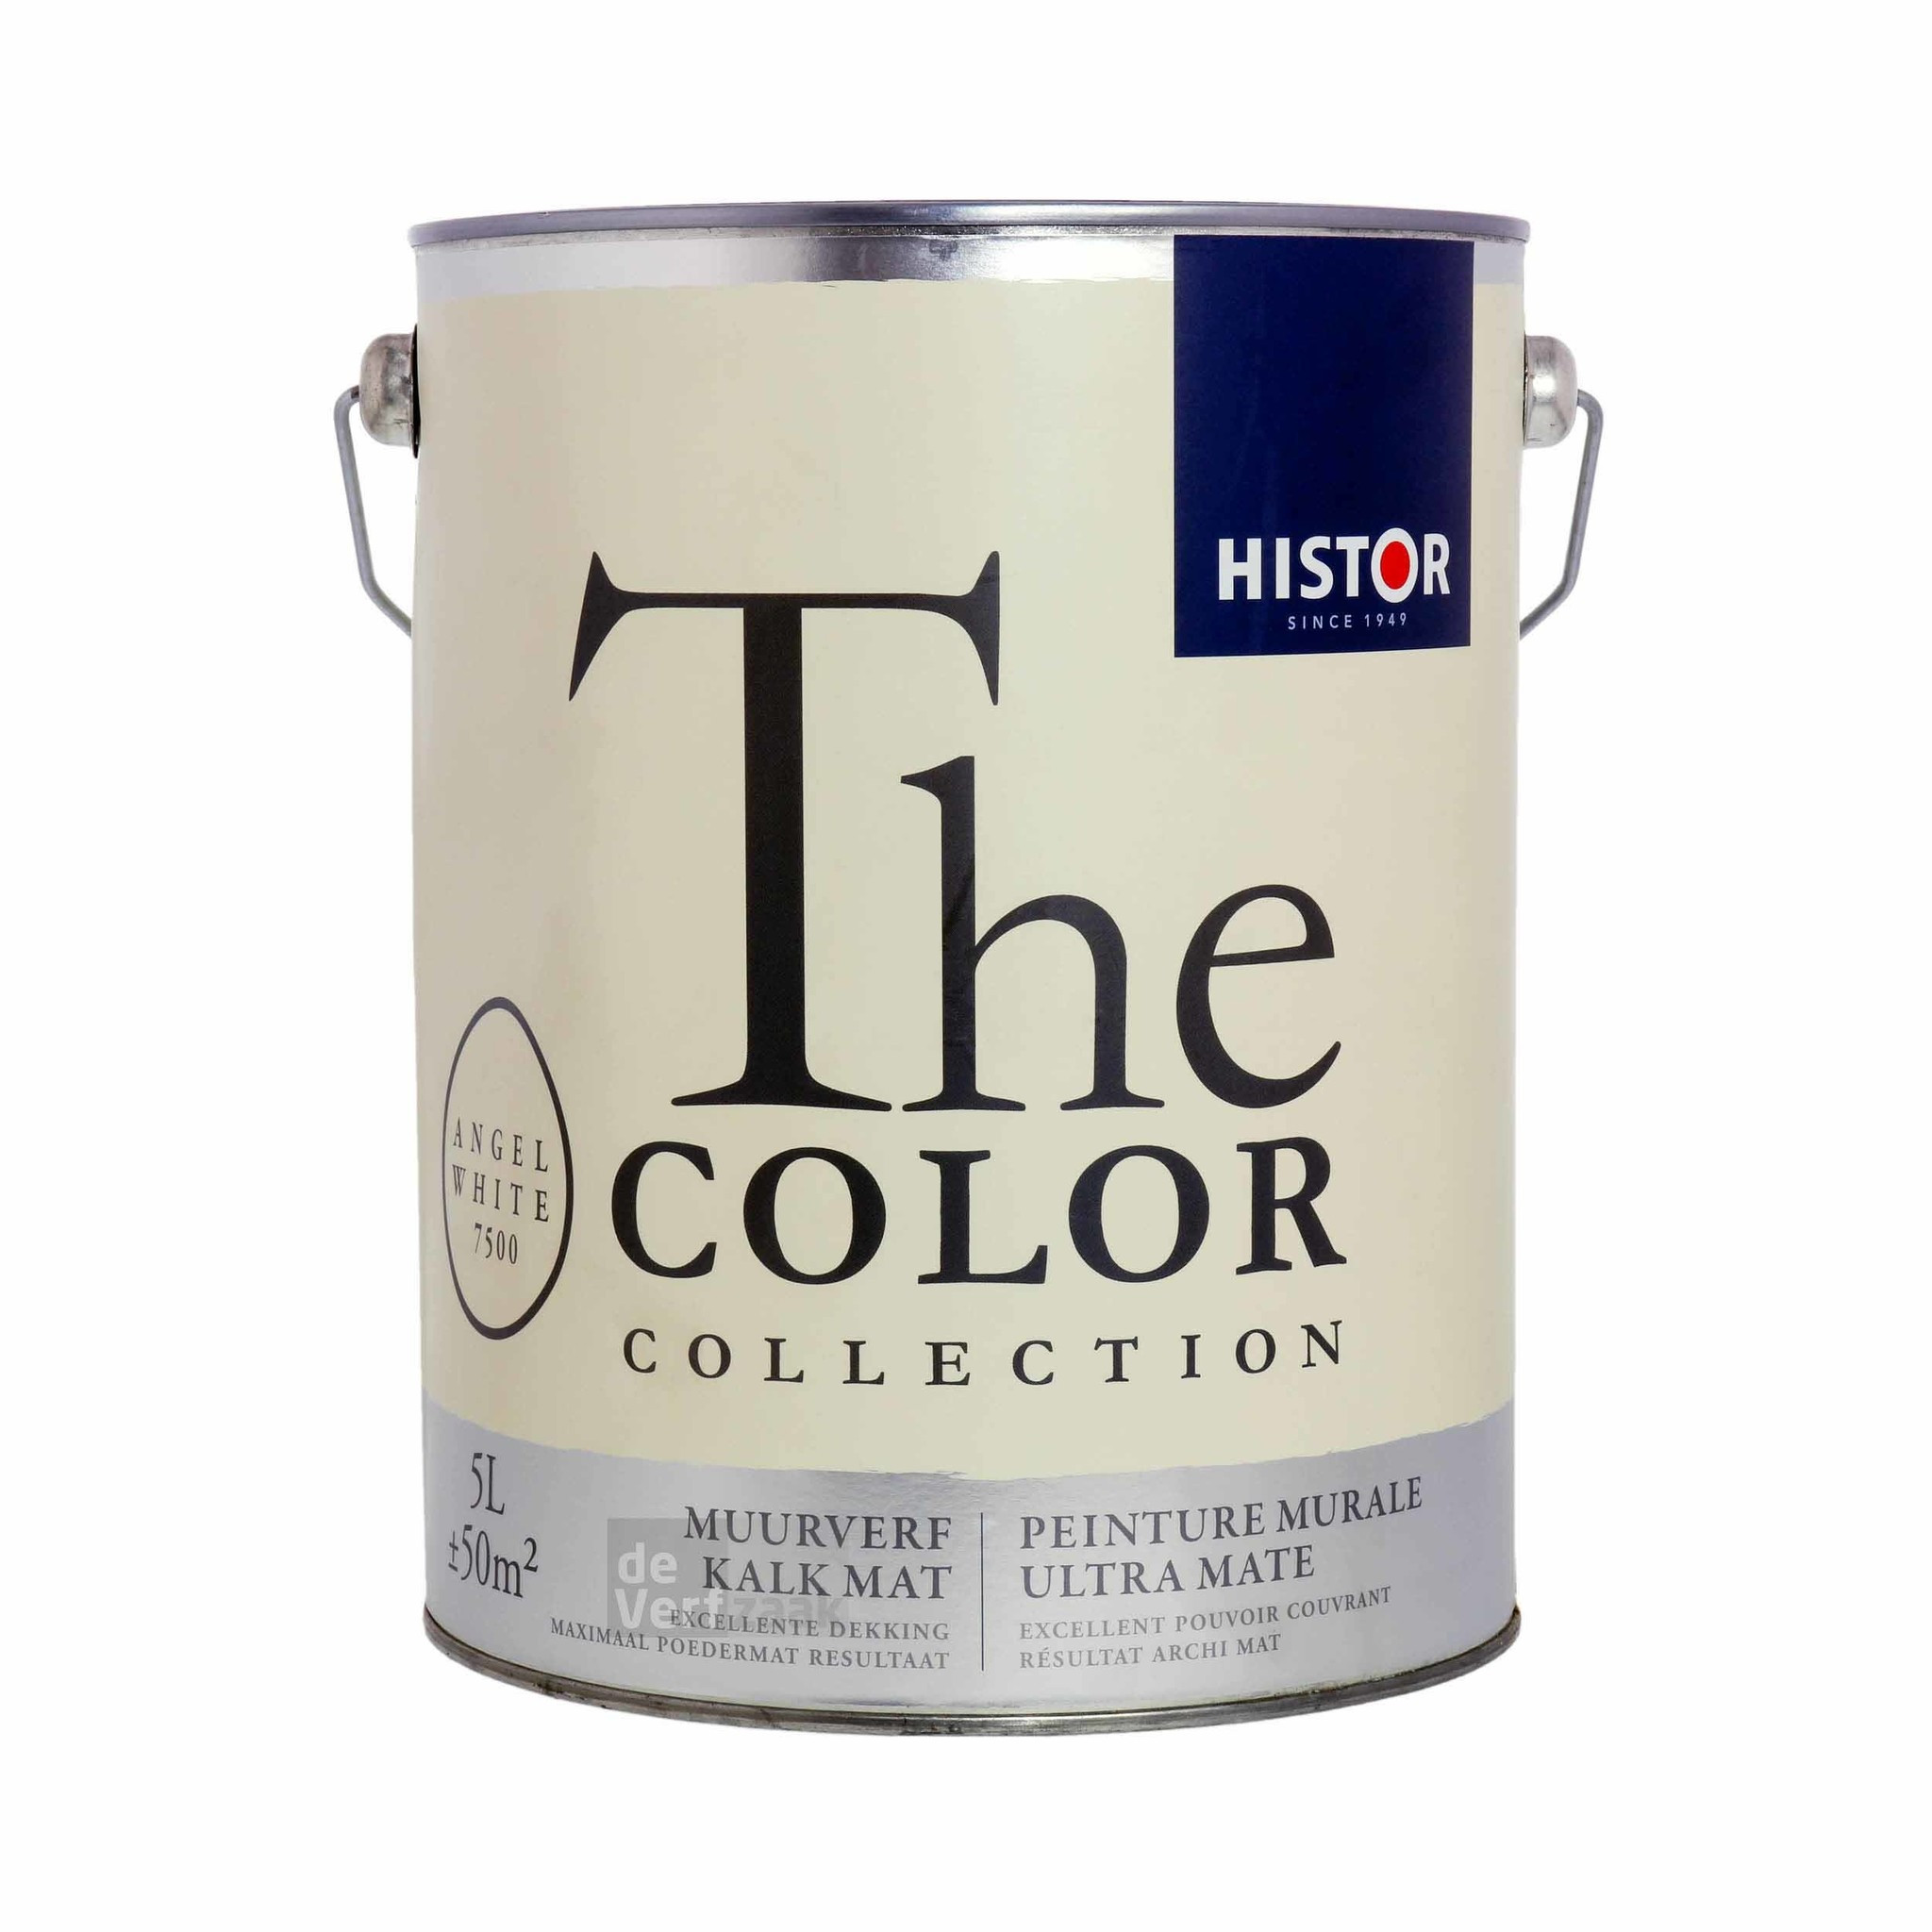 Histor The Color Collection Muurverf Kalkmat - Angel White - 5 liter